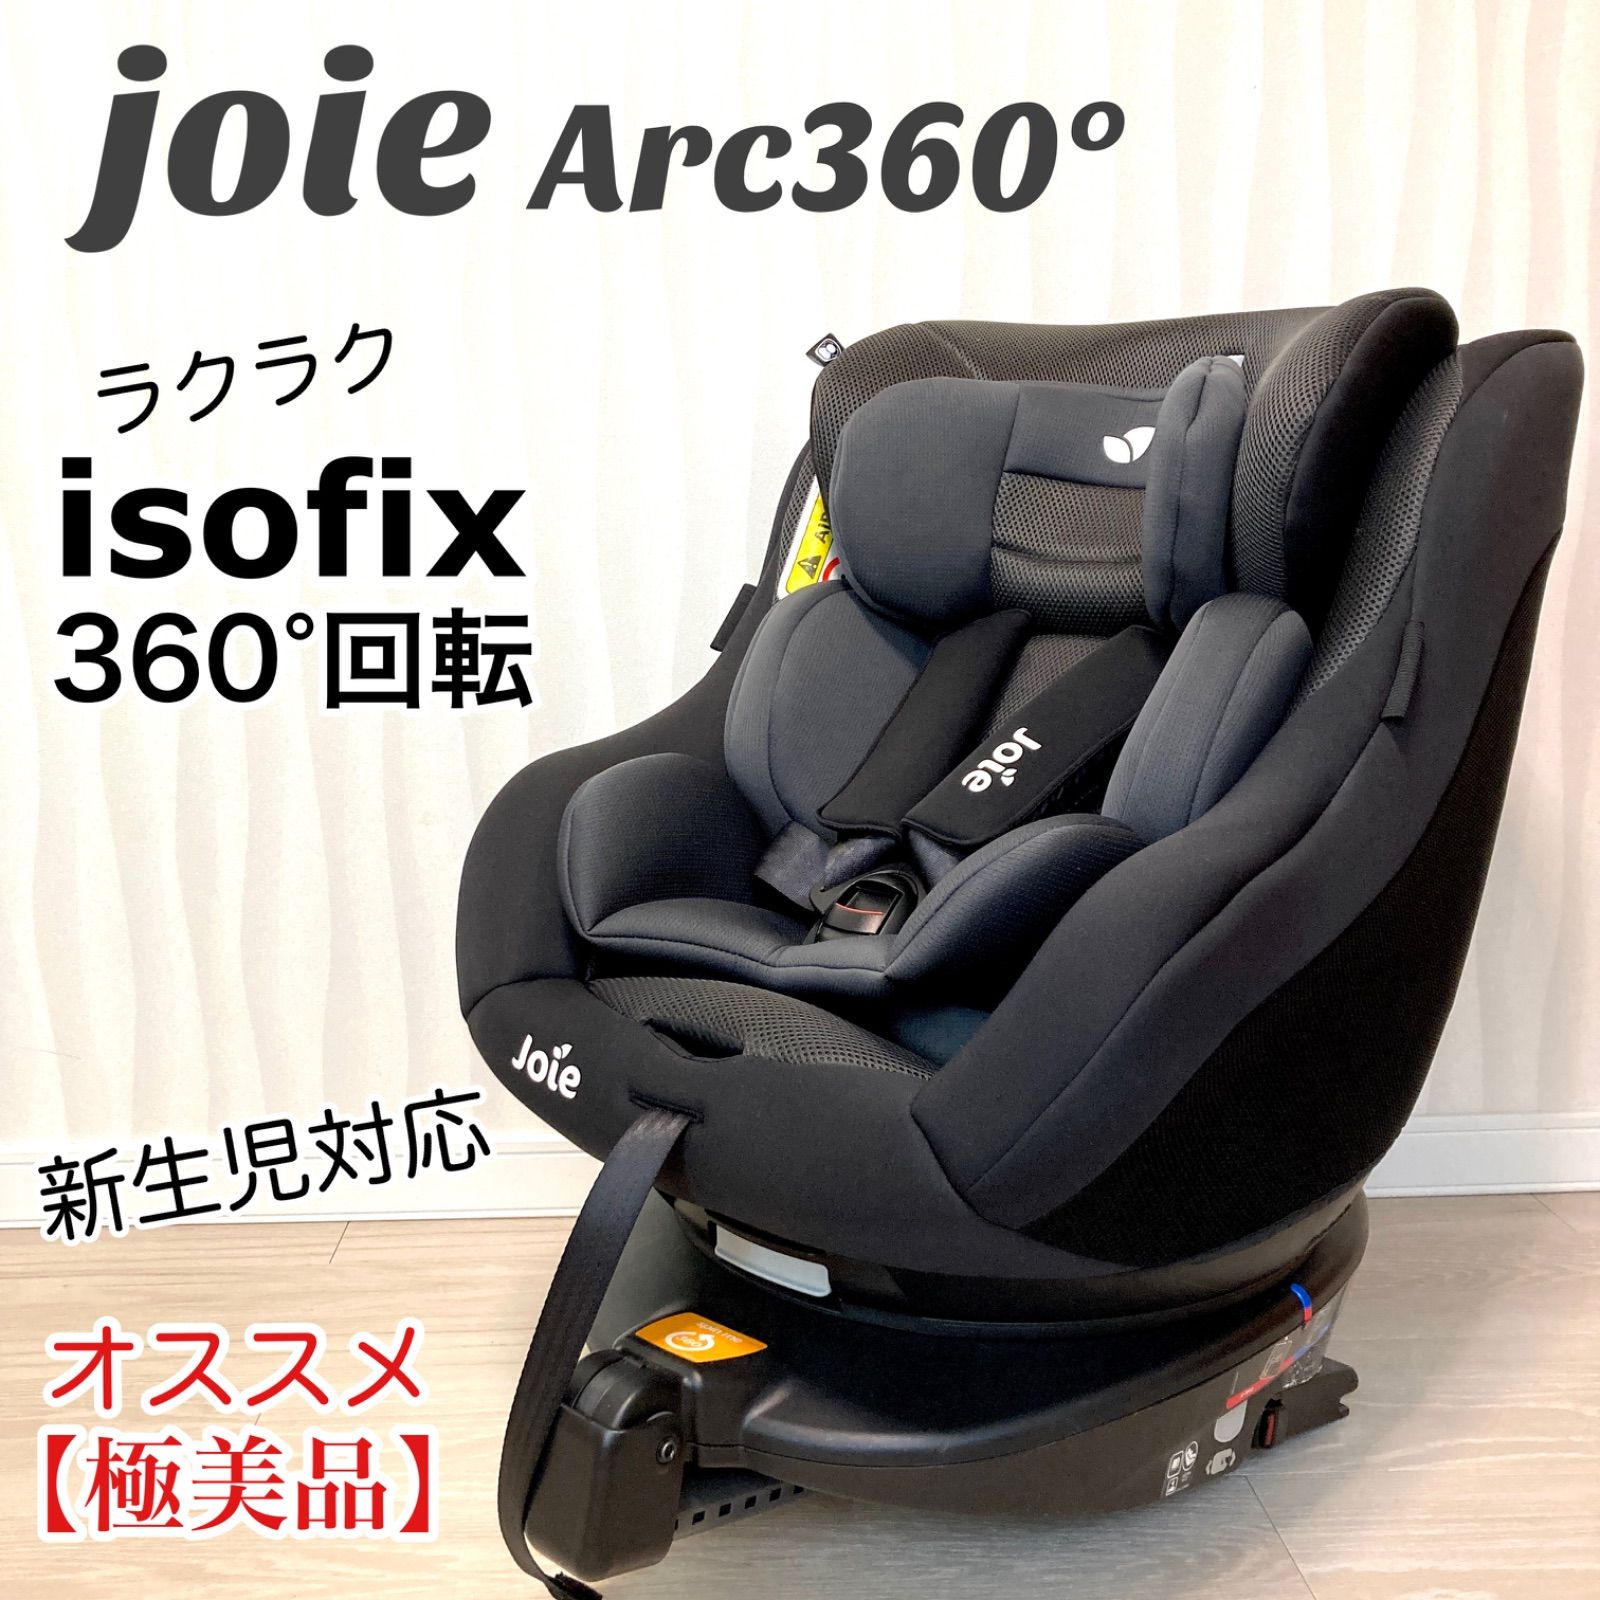 Joie Arc360° キャノピー付 回転式 ISOFIX新生児対応 - 通販